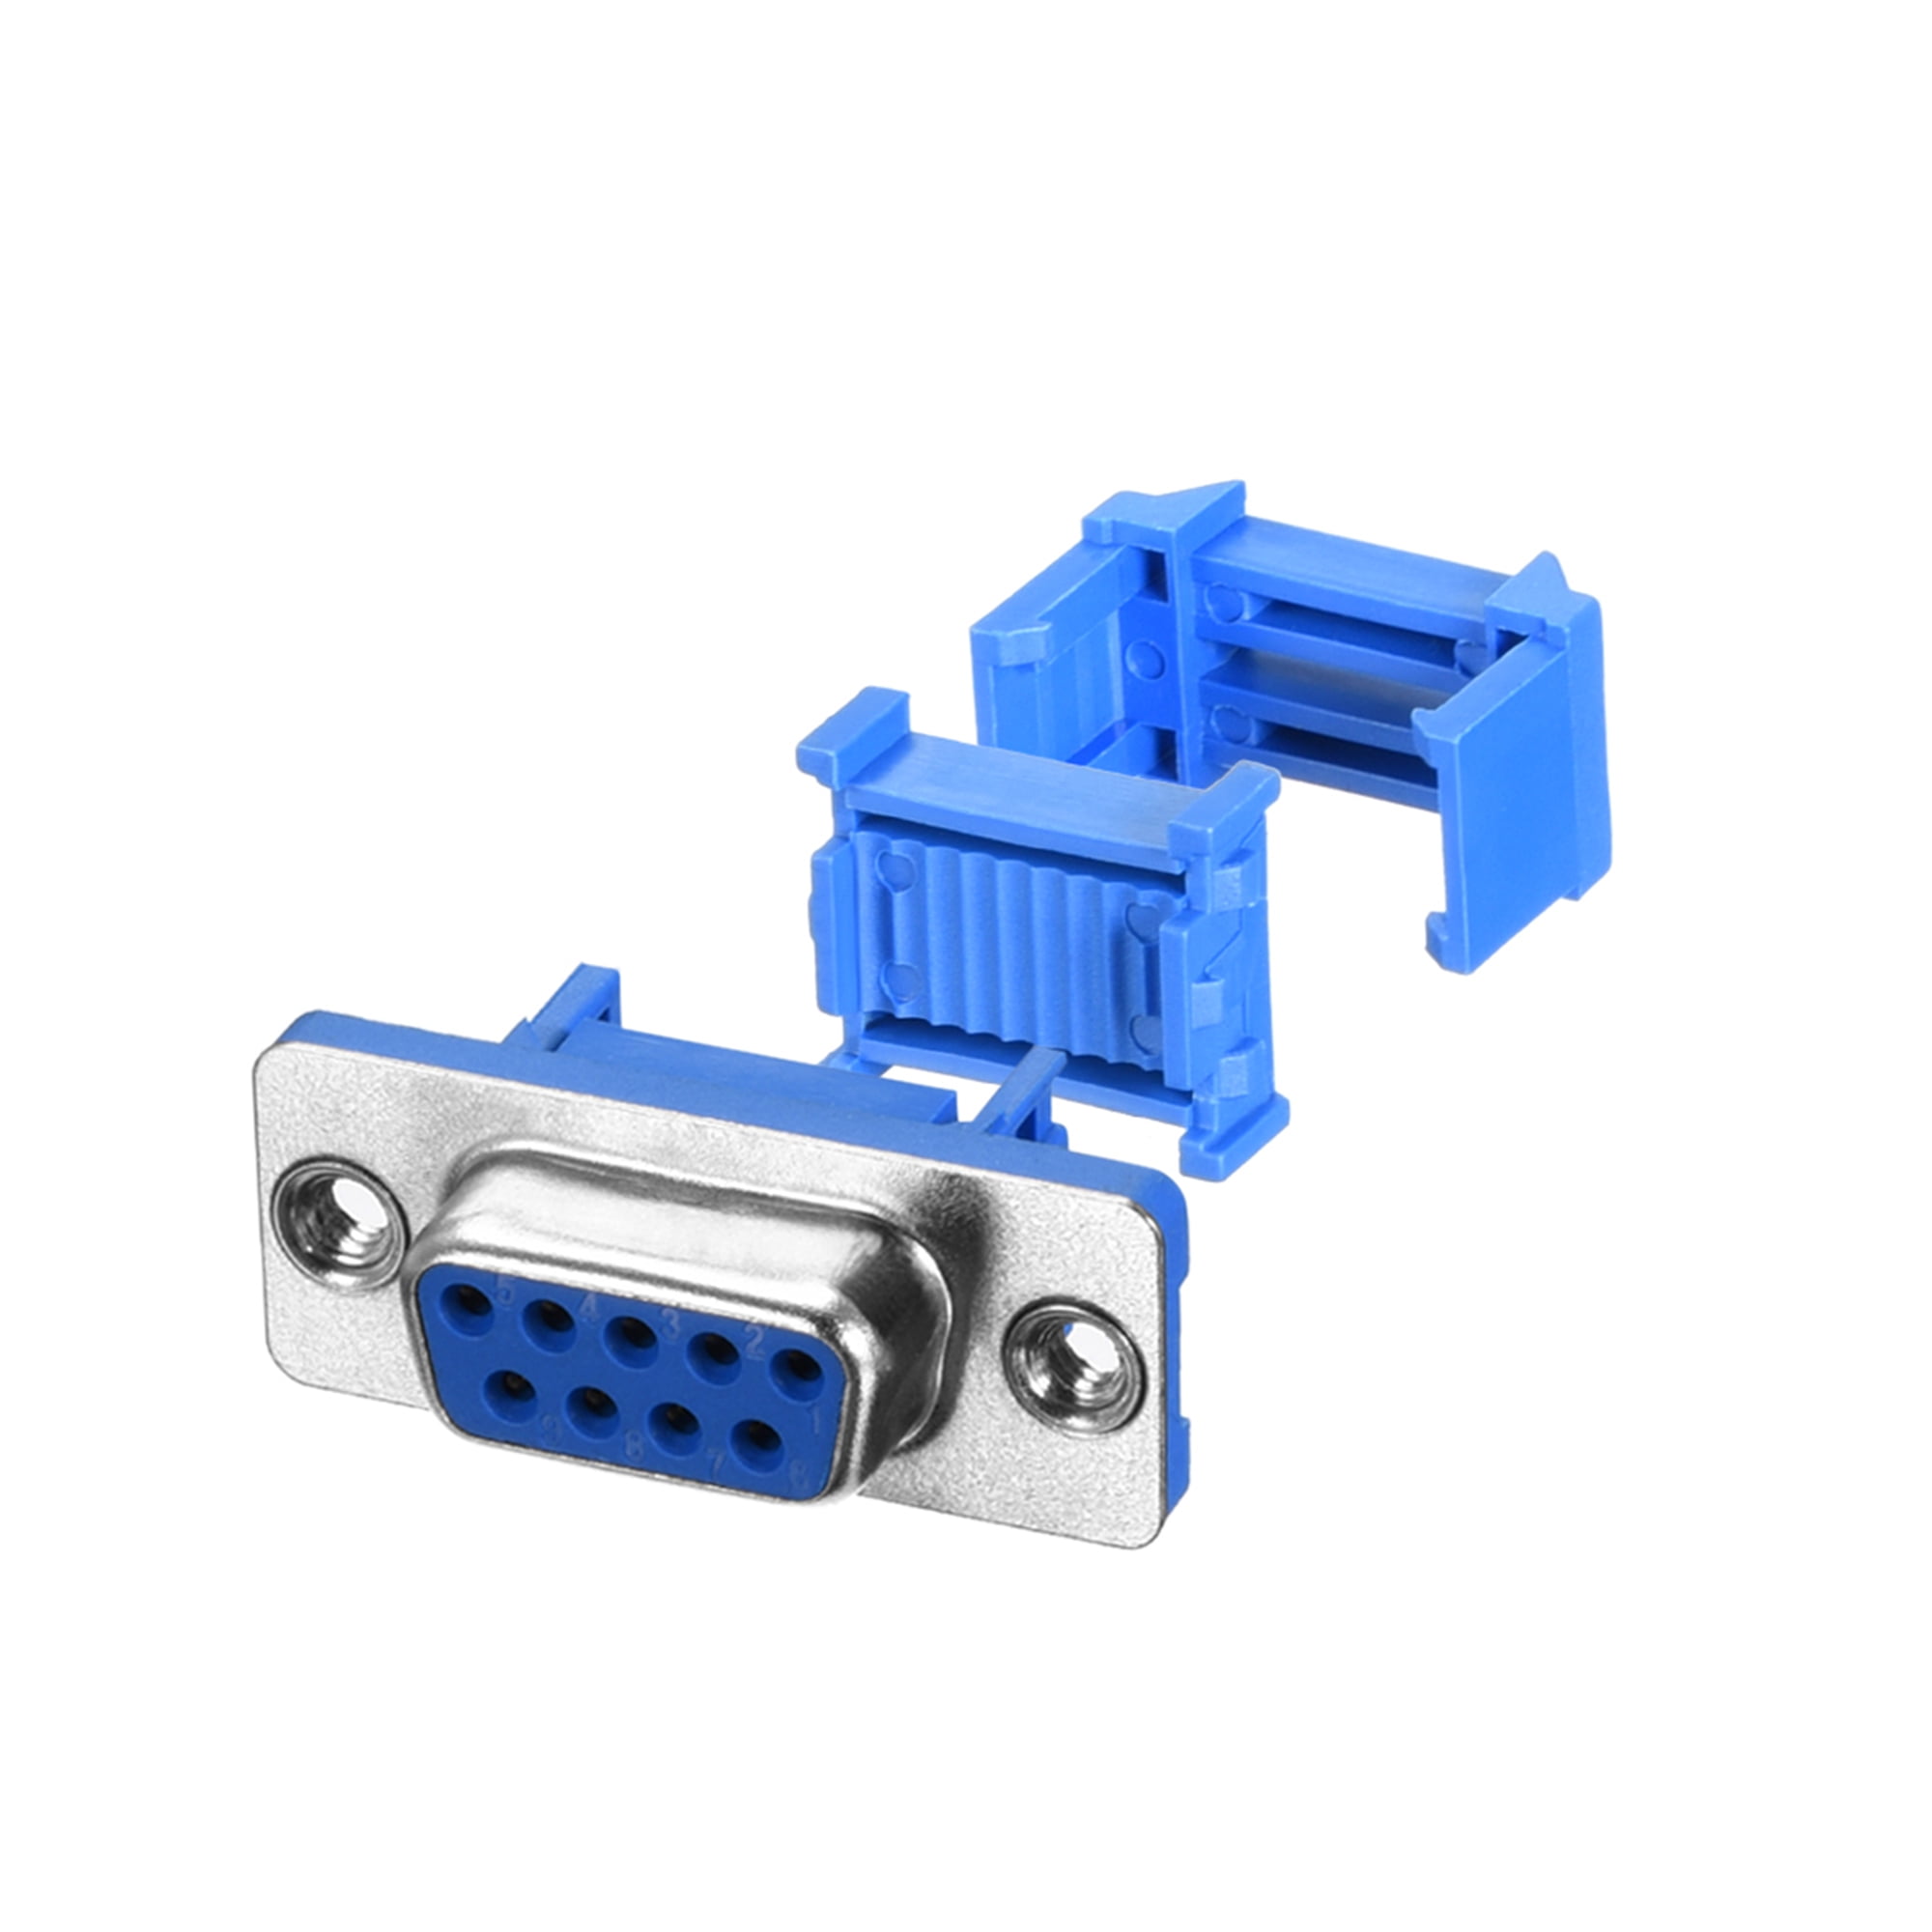 2 x 25-Way IDC Male D Plug Connector 